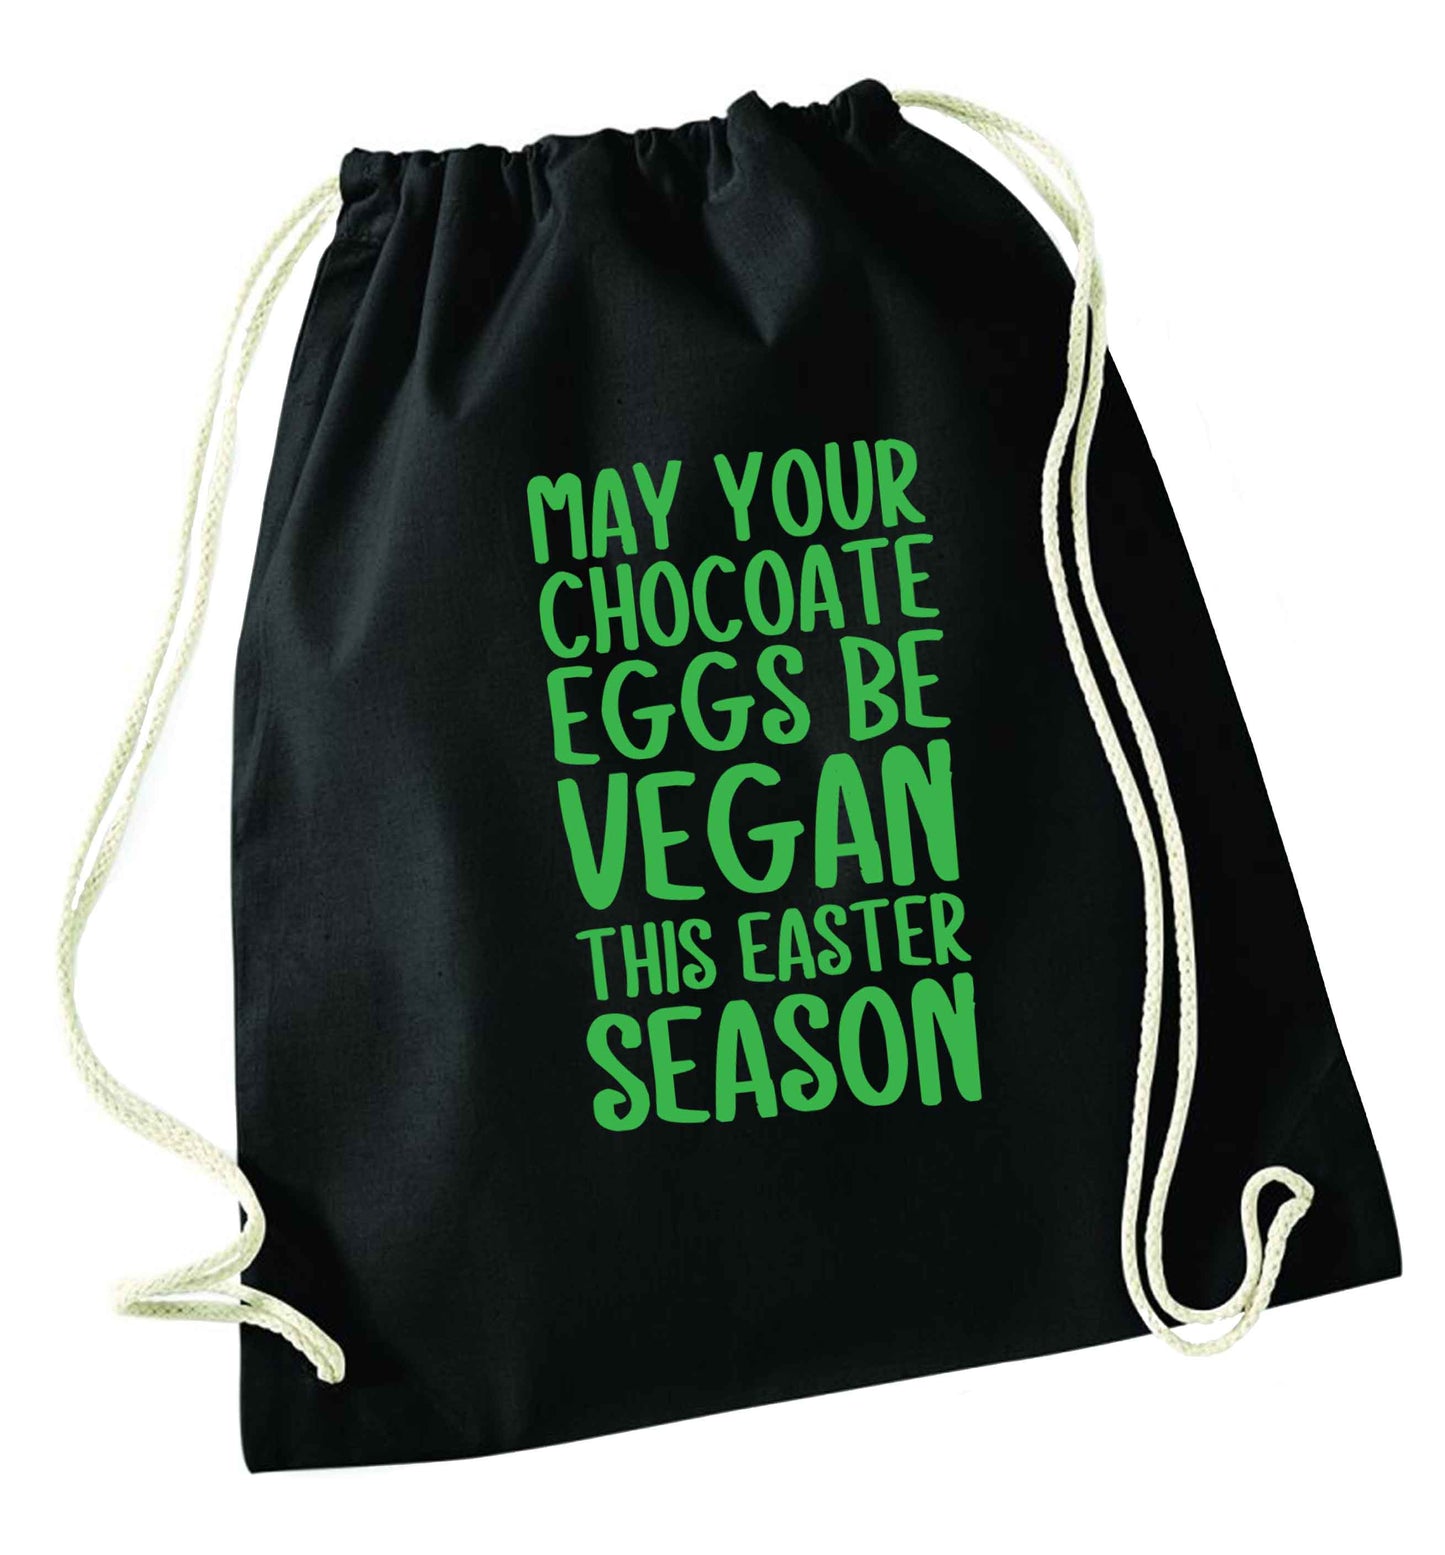 Easter bunny approved! Vegans will love this easter themed black drawstring bag